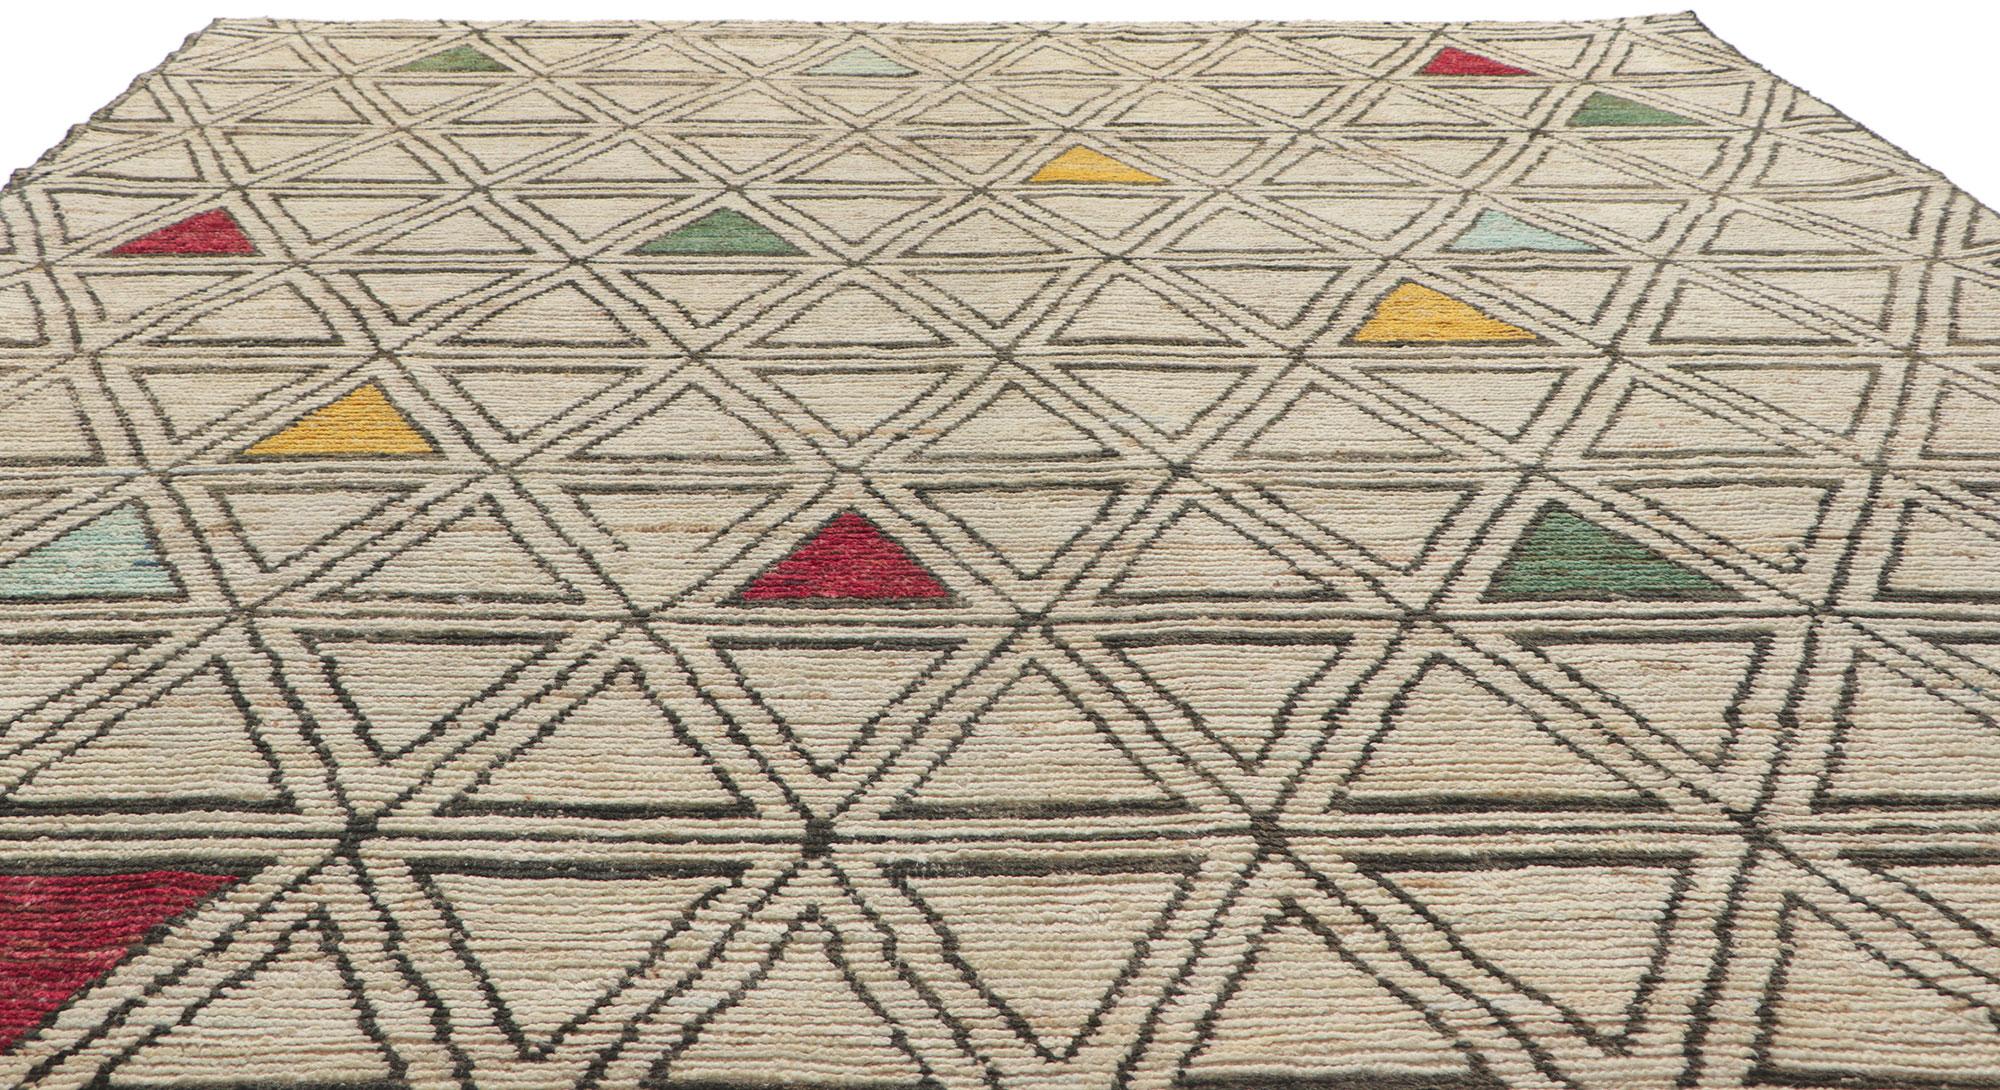 New Geometric Moroccan Rug, Triangular Tessellation In New Condition For Sale In Dallas, TX